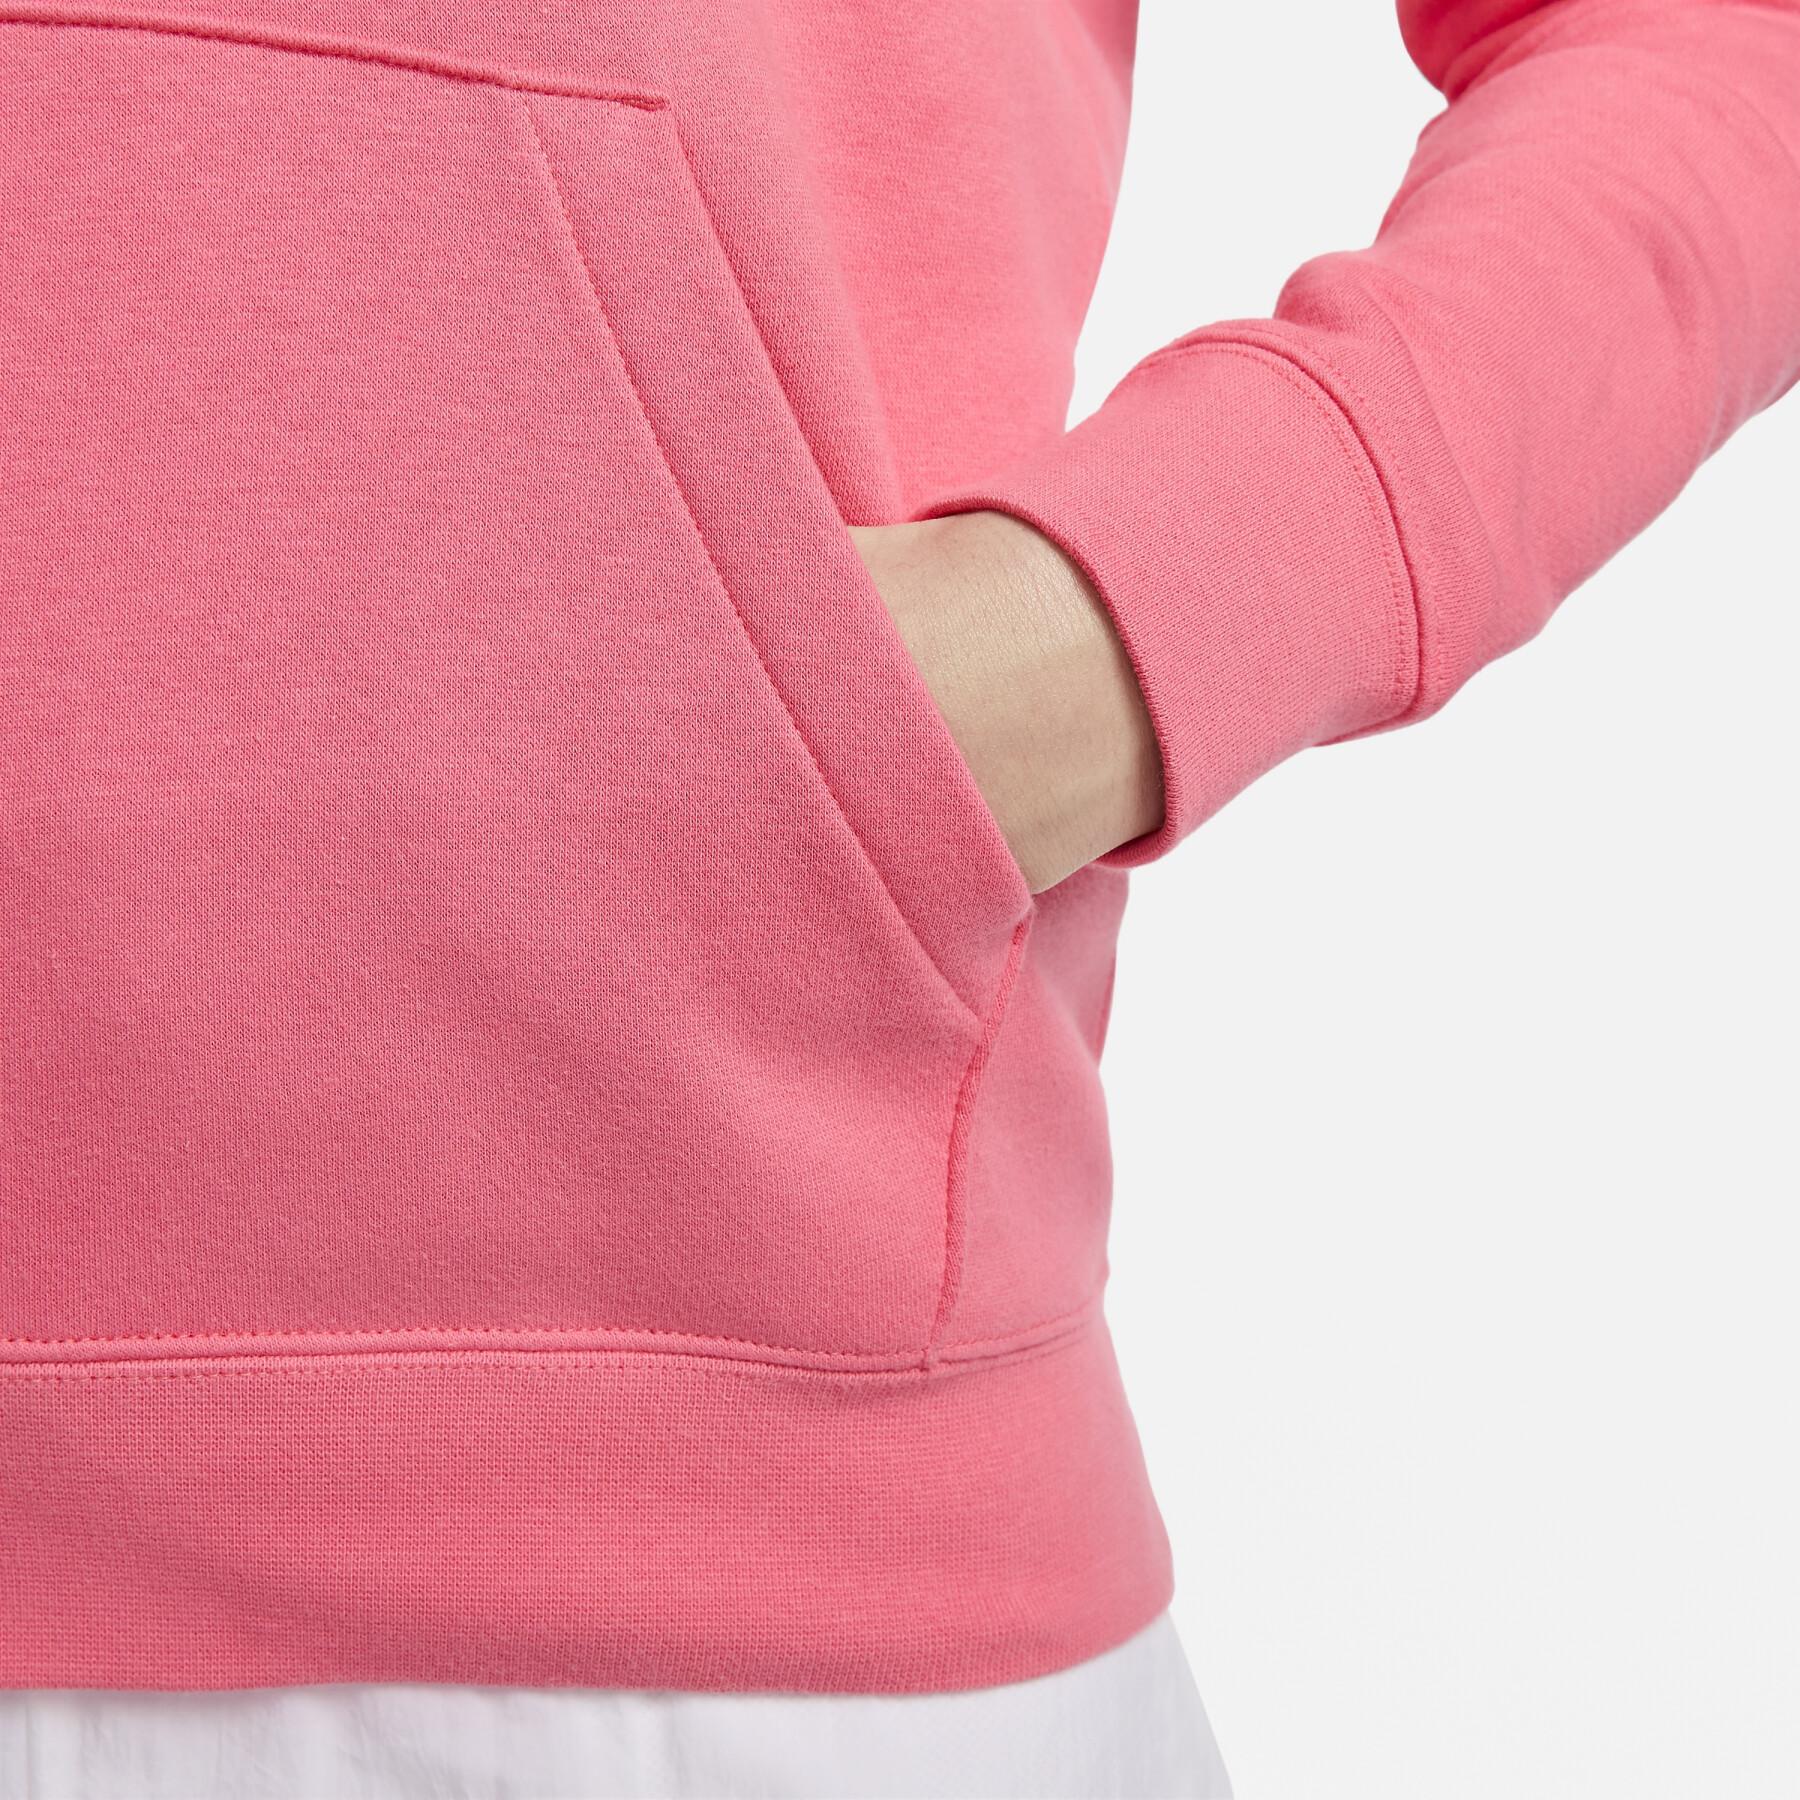 Sweatshirt sudadera con capucha para mujer Nike Club GX Std